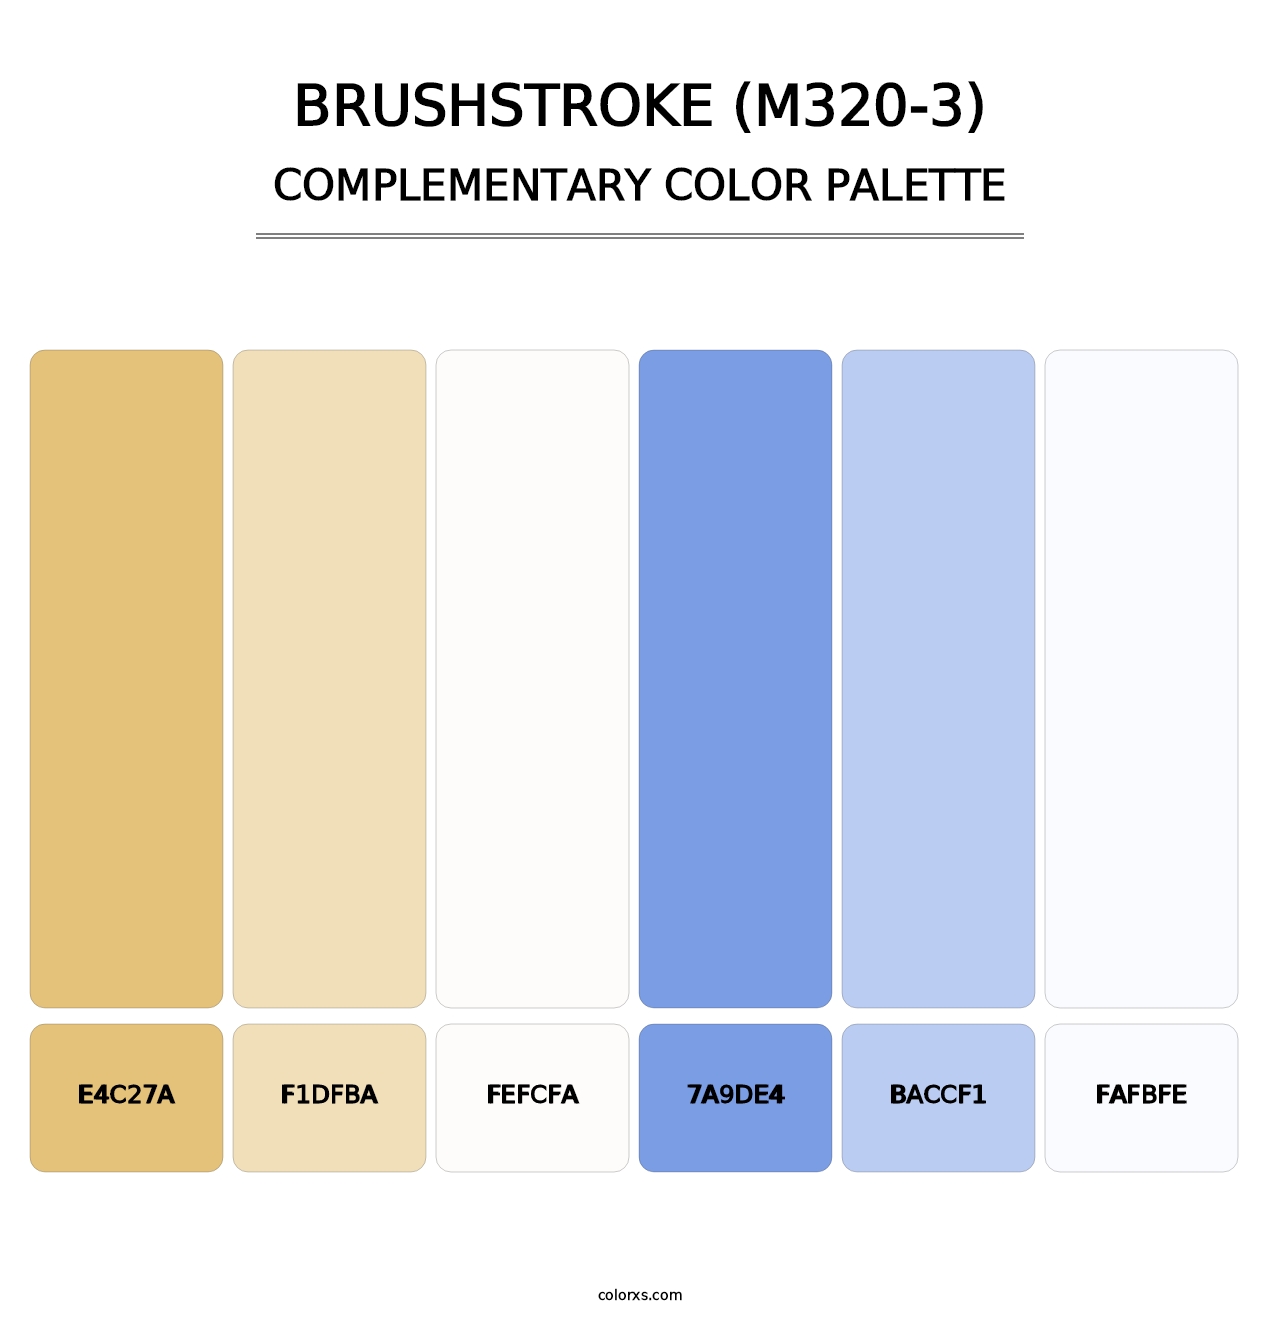 Brushstroke (M320-3) - Complementary Color Palette